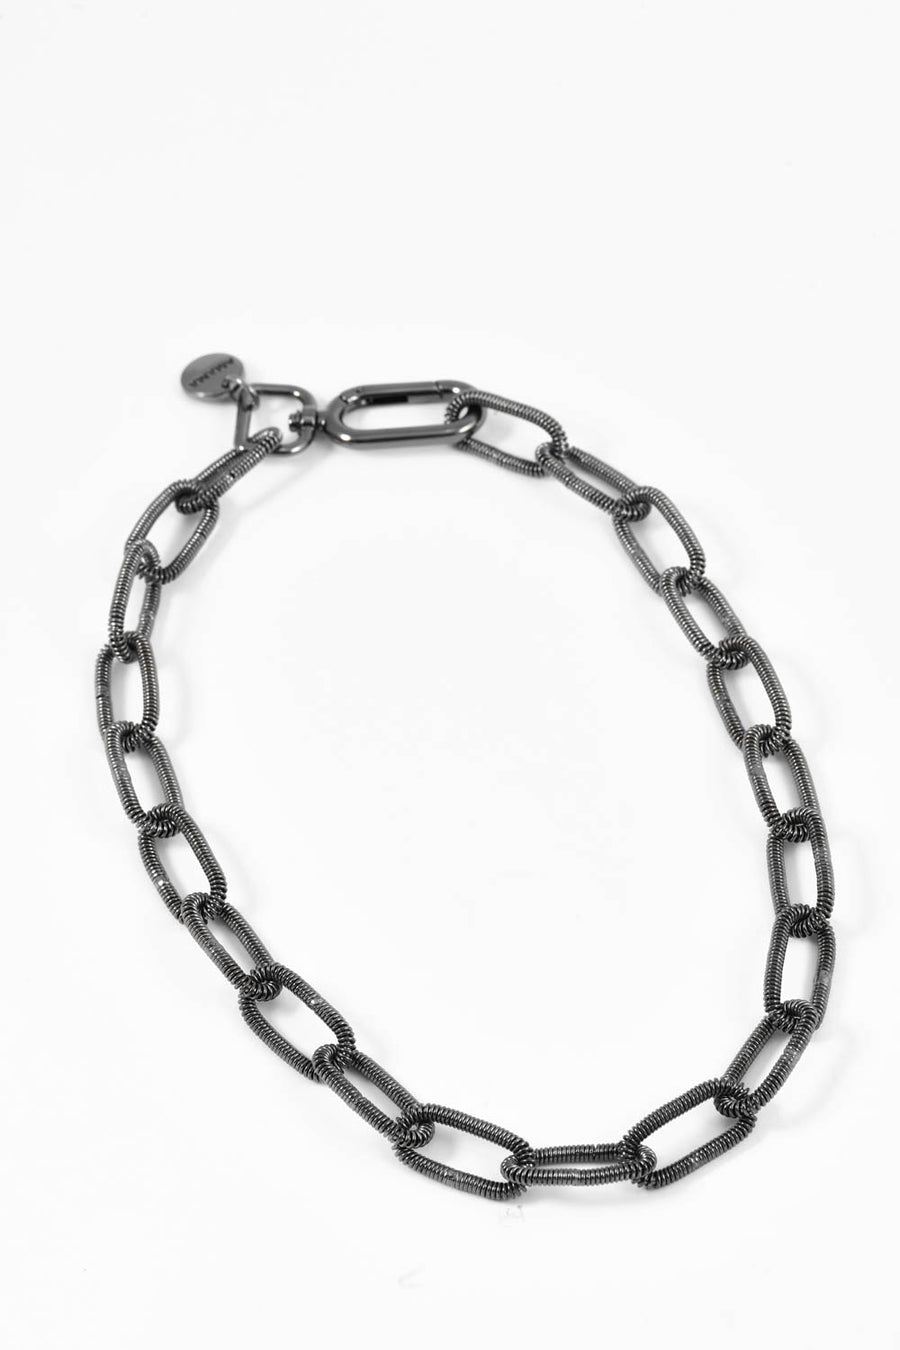 Orb link Necklace in Gunmetal